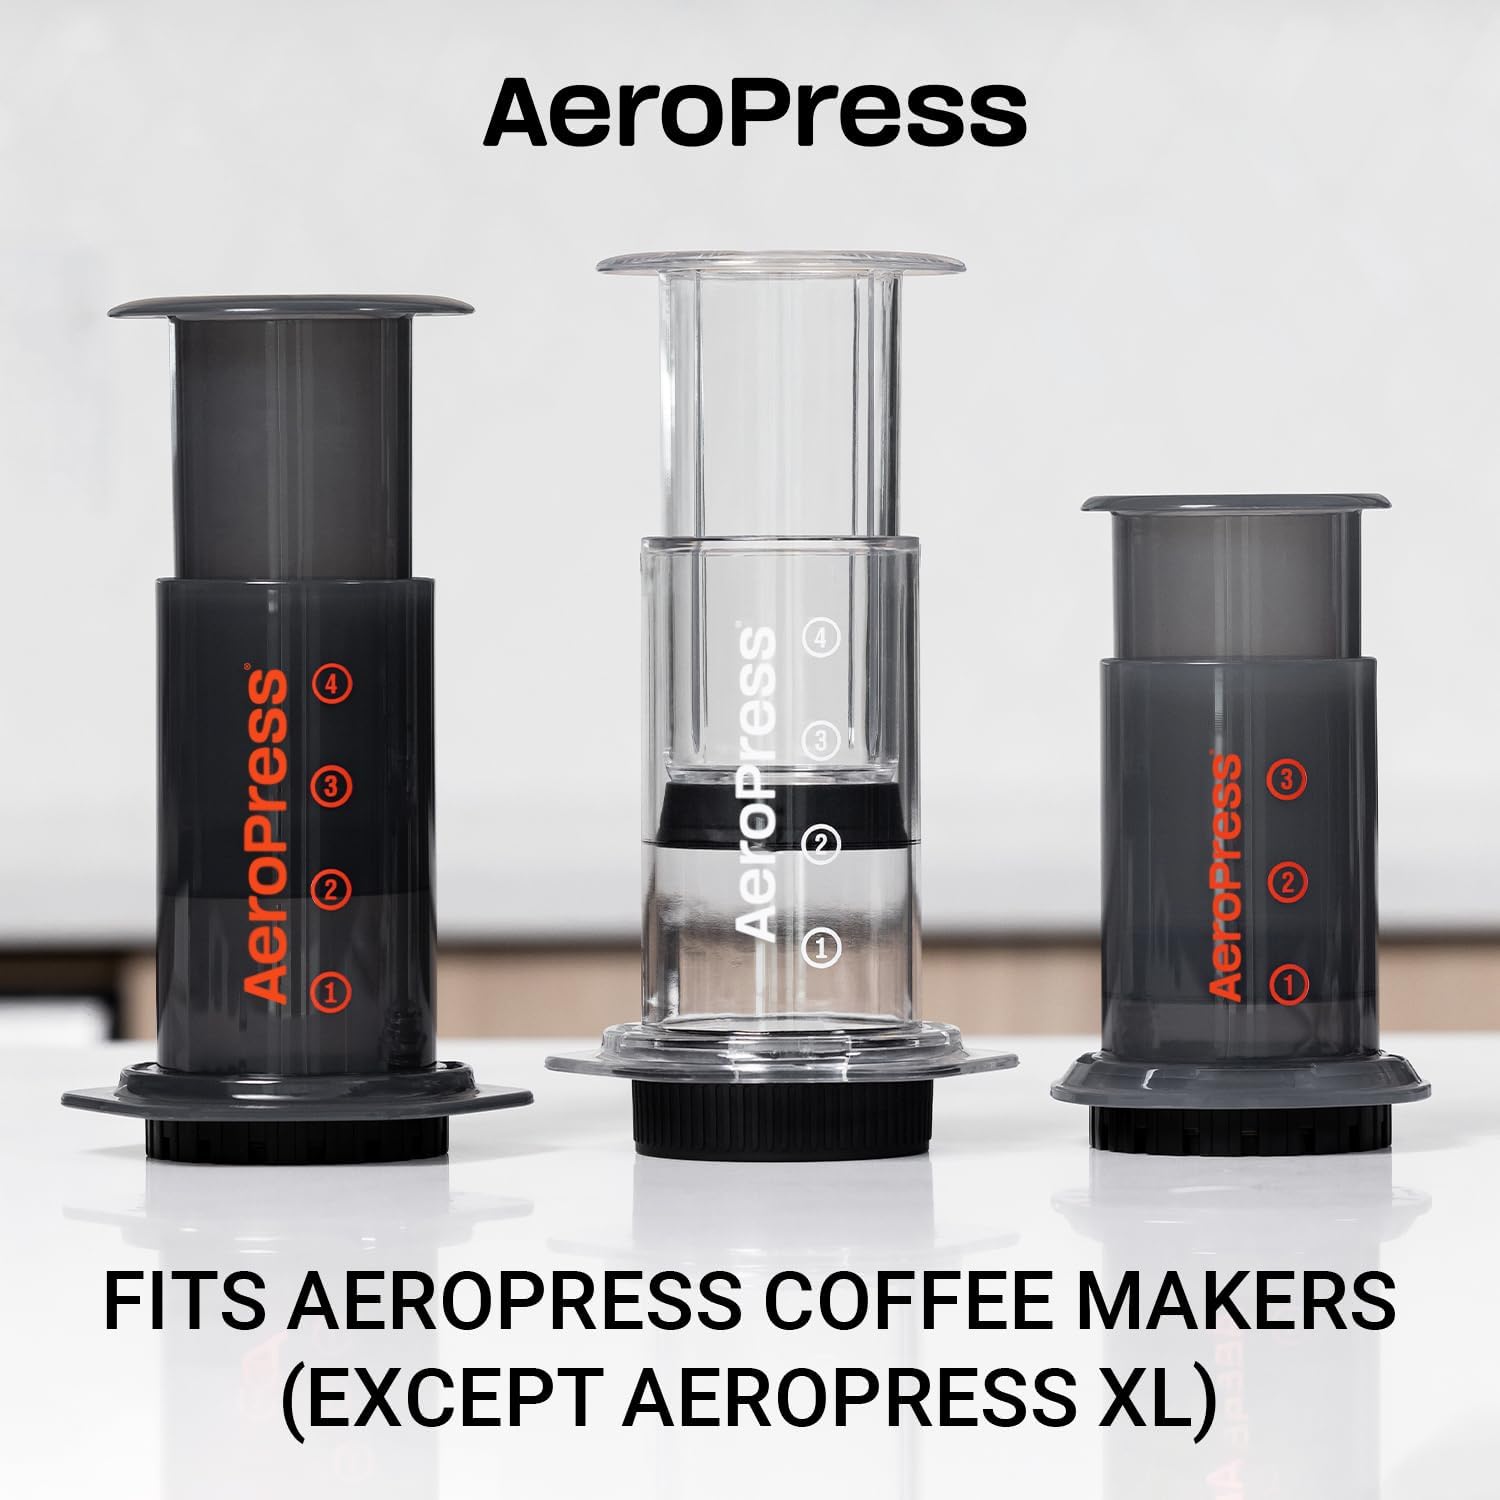 Aeropress 350 Micro Filters